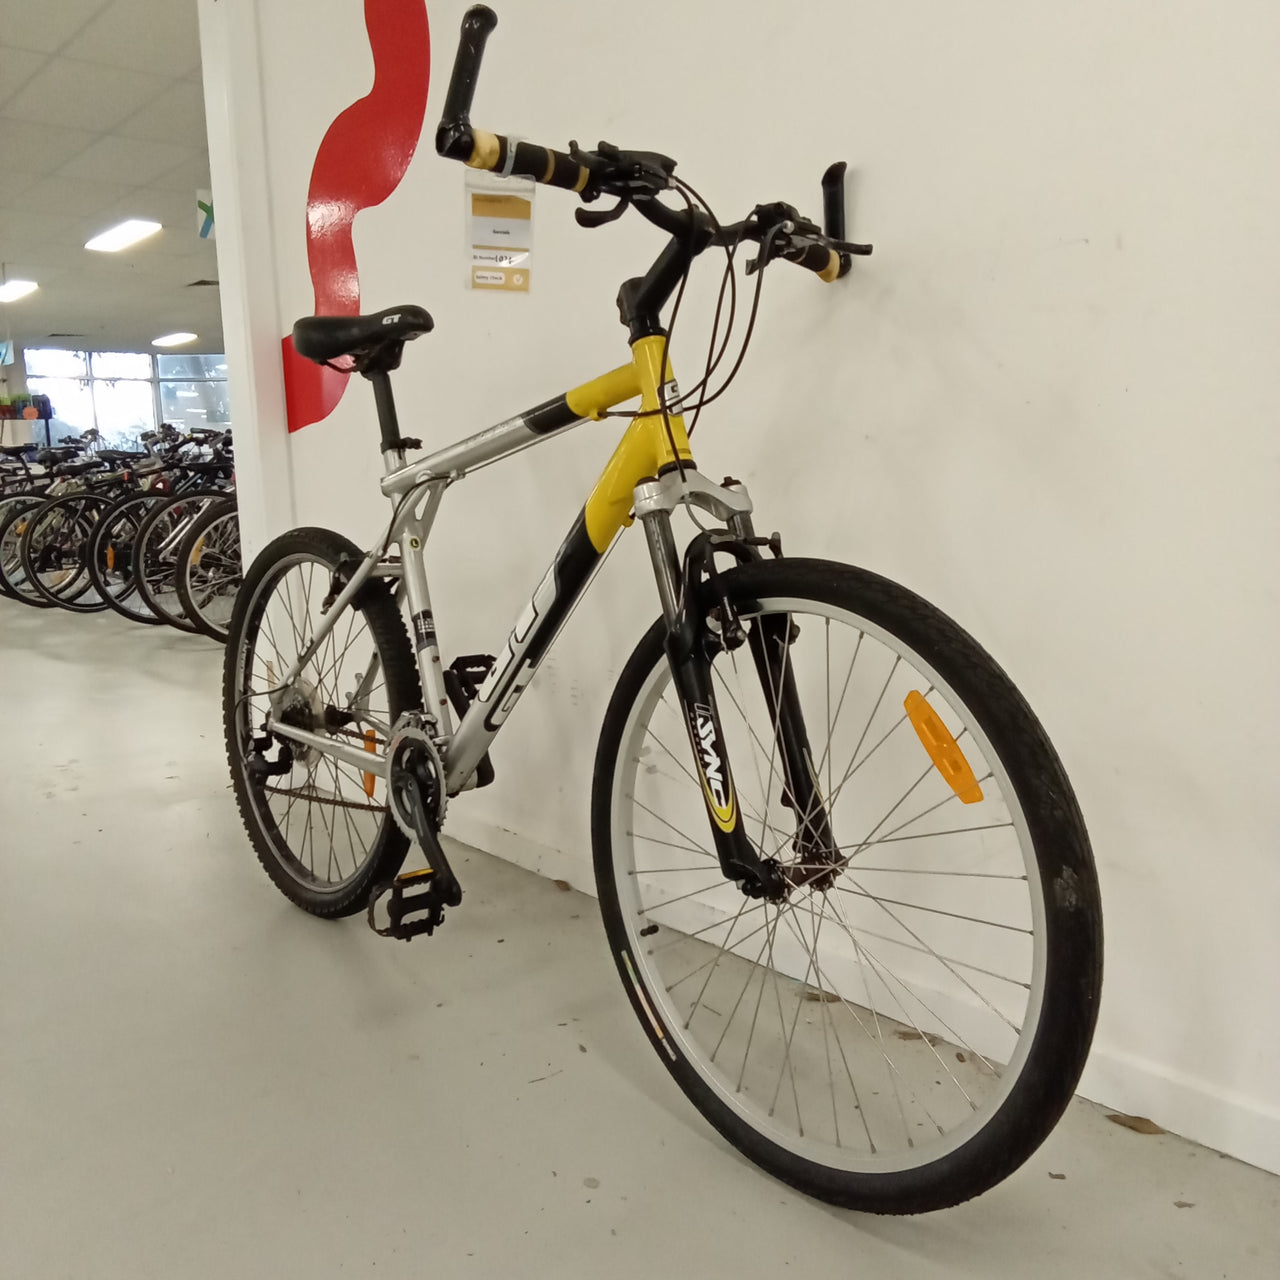 1074 - 52cm Yellow,
Silver, Mountain Bike, Bike